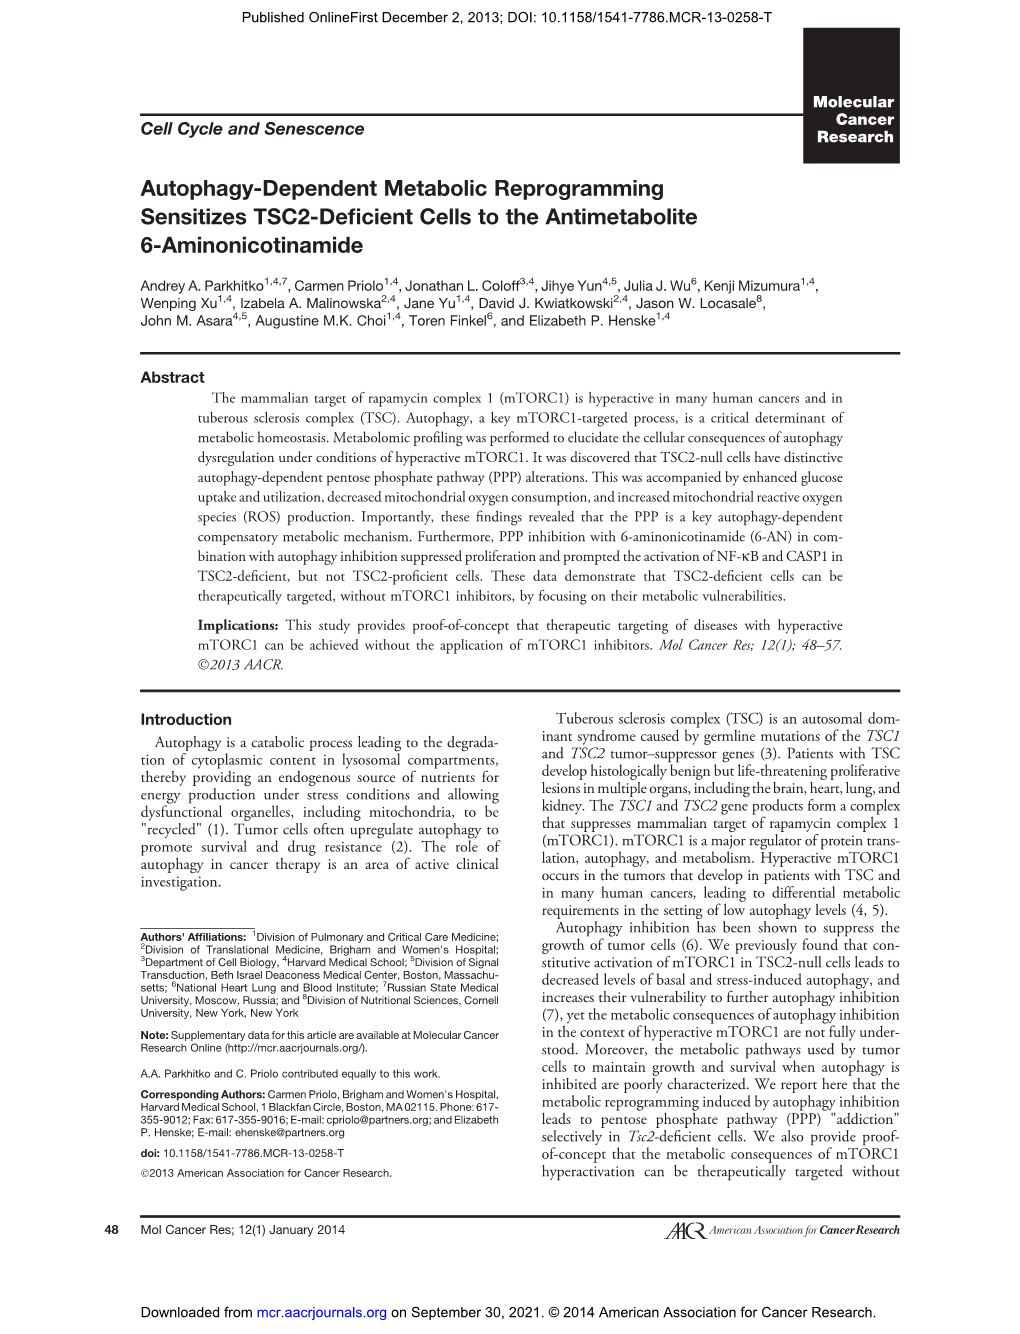 Autophagy-Dependent Metabolic Reprogramming Sensitizes TSC2-Deﬁcient Cells to the Antimetabolite 6-Aminonicotinamide